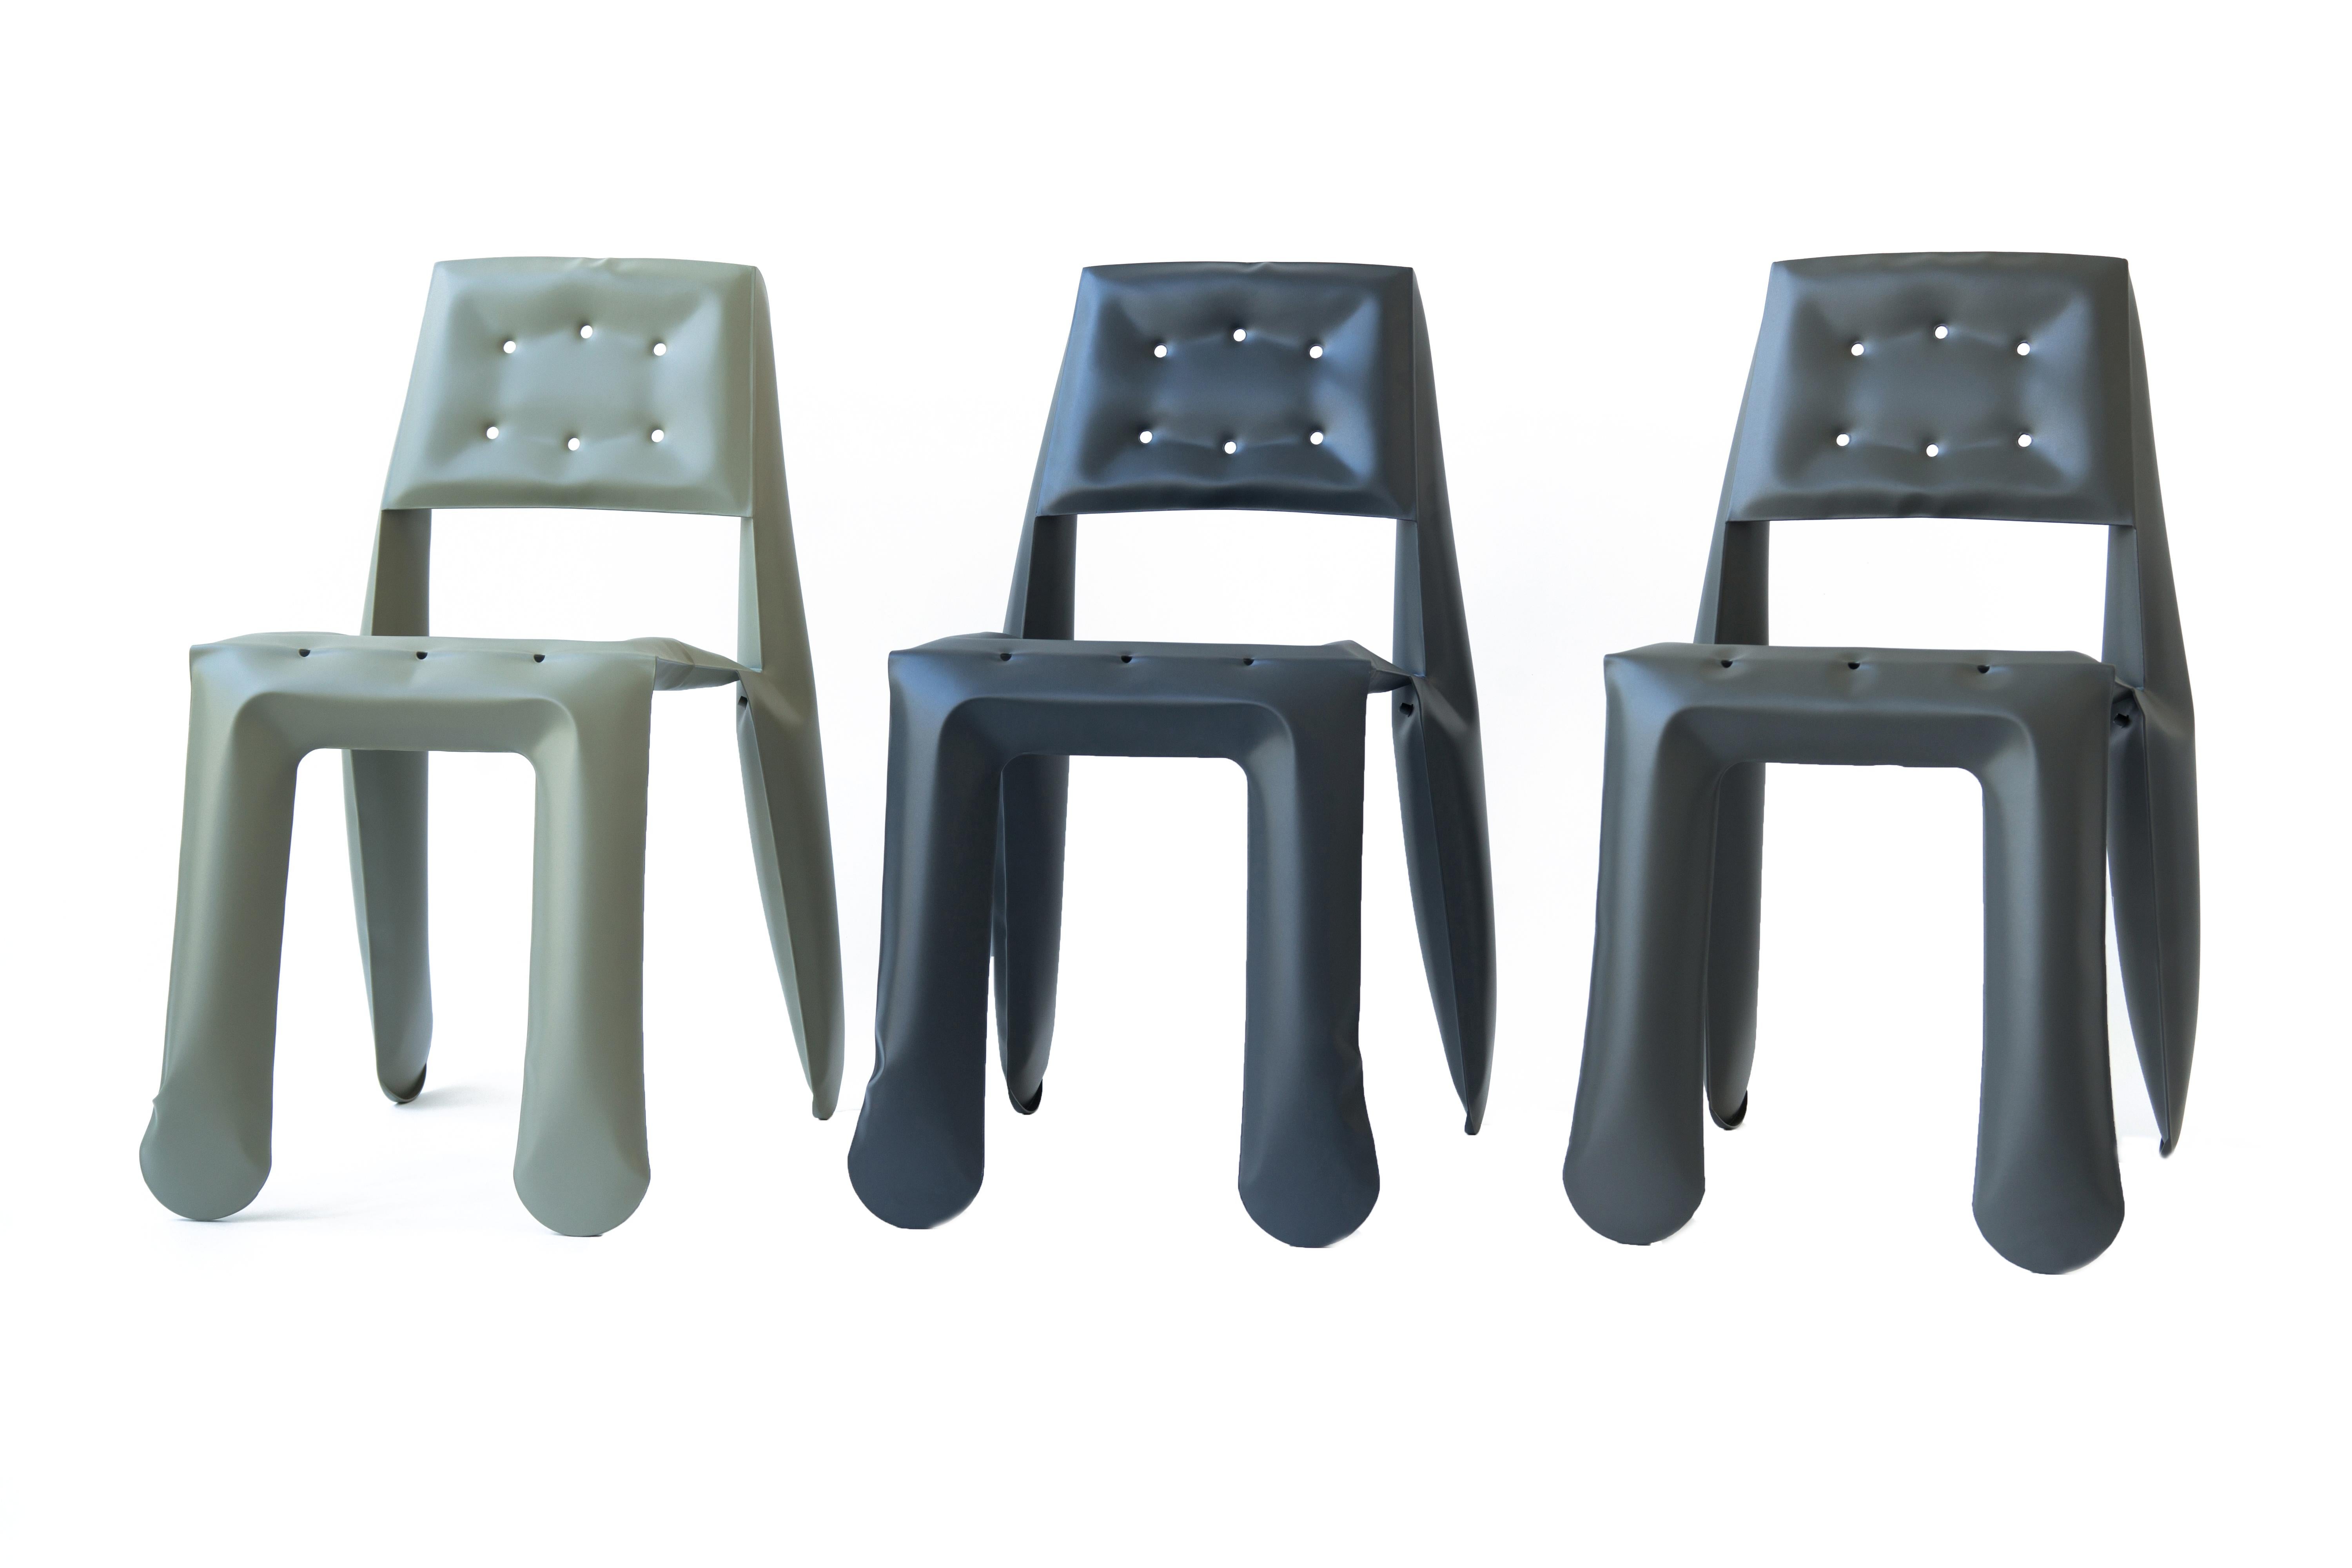 Moss Grey Aluminum Chippensteel 0.5 Sculptural Chair by Zieta For Sale 4